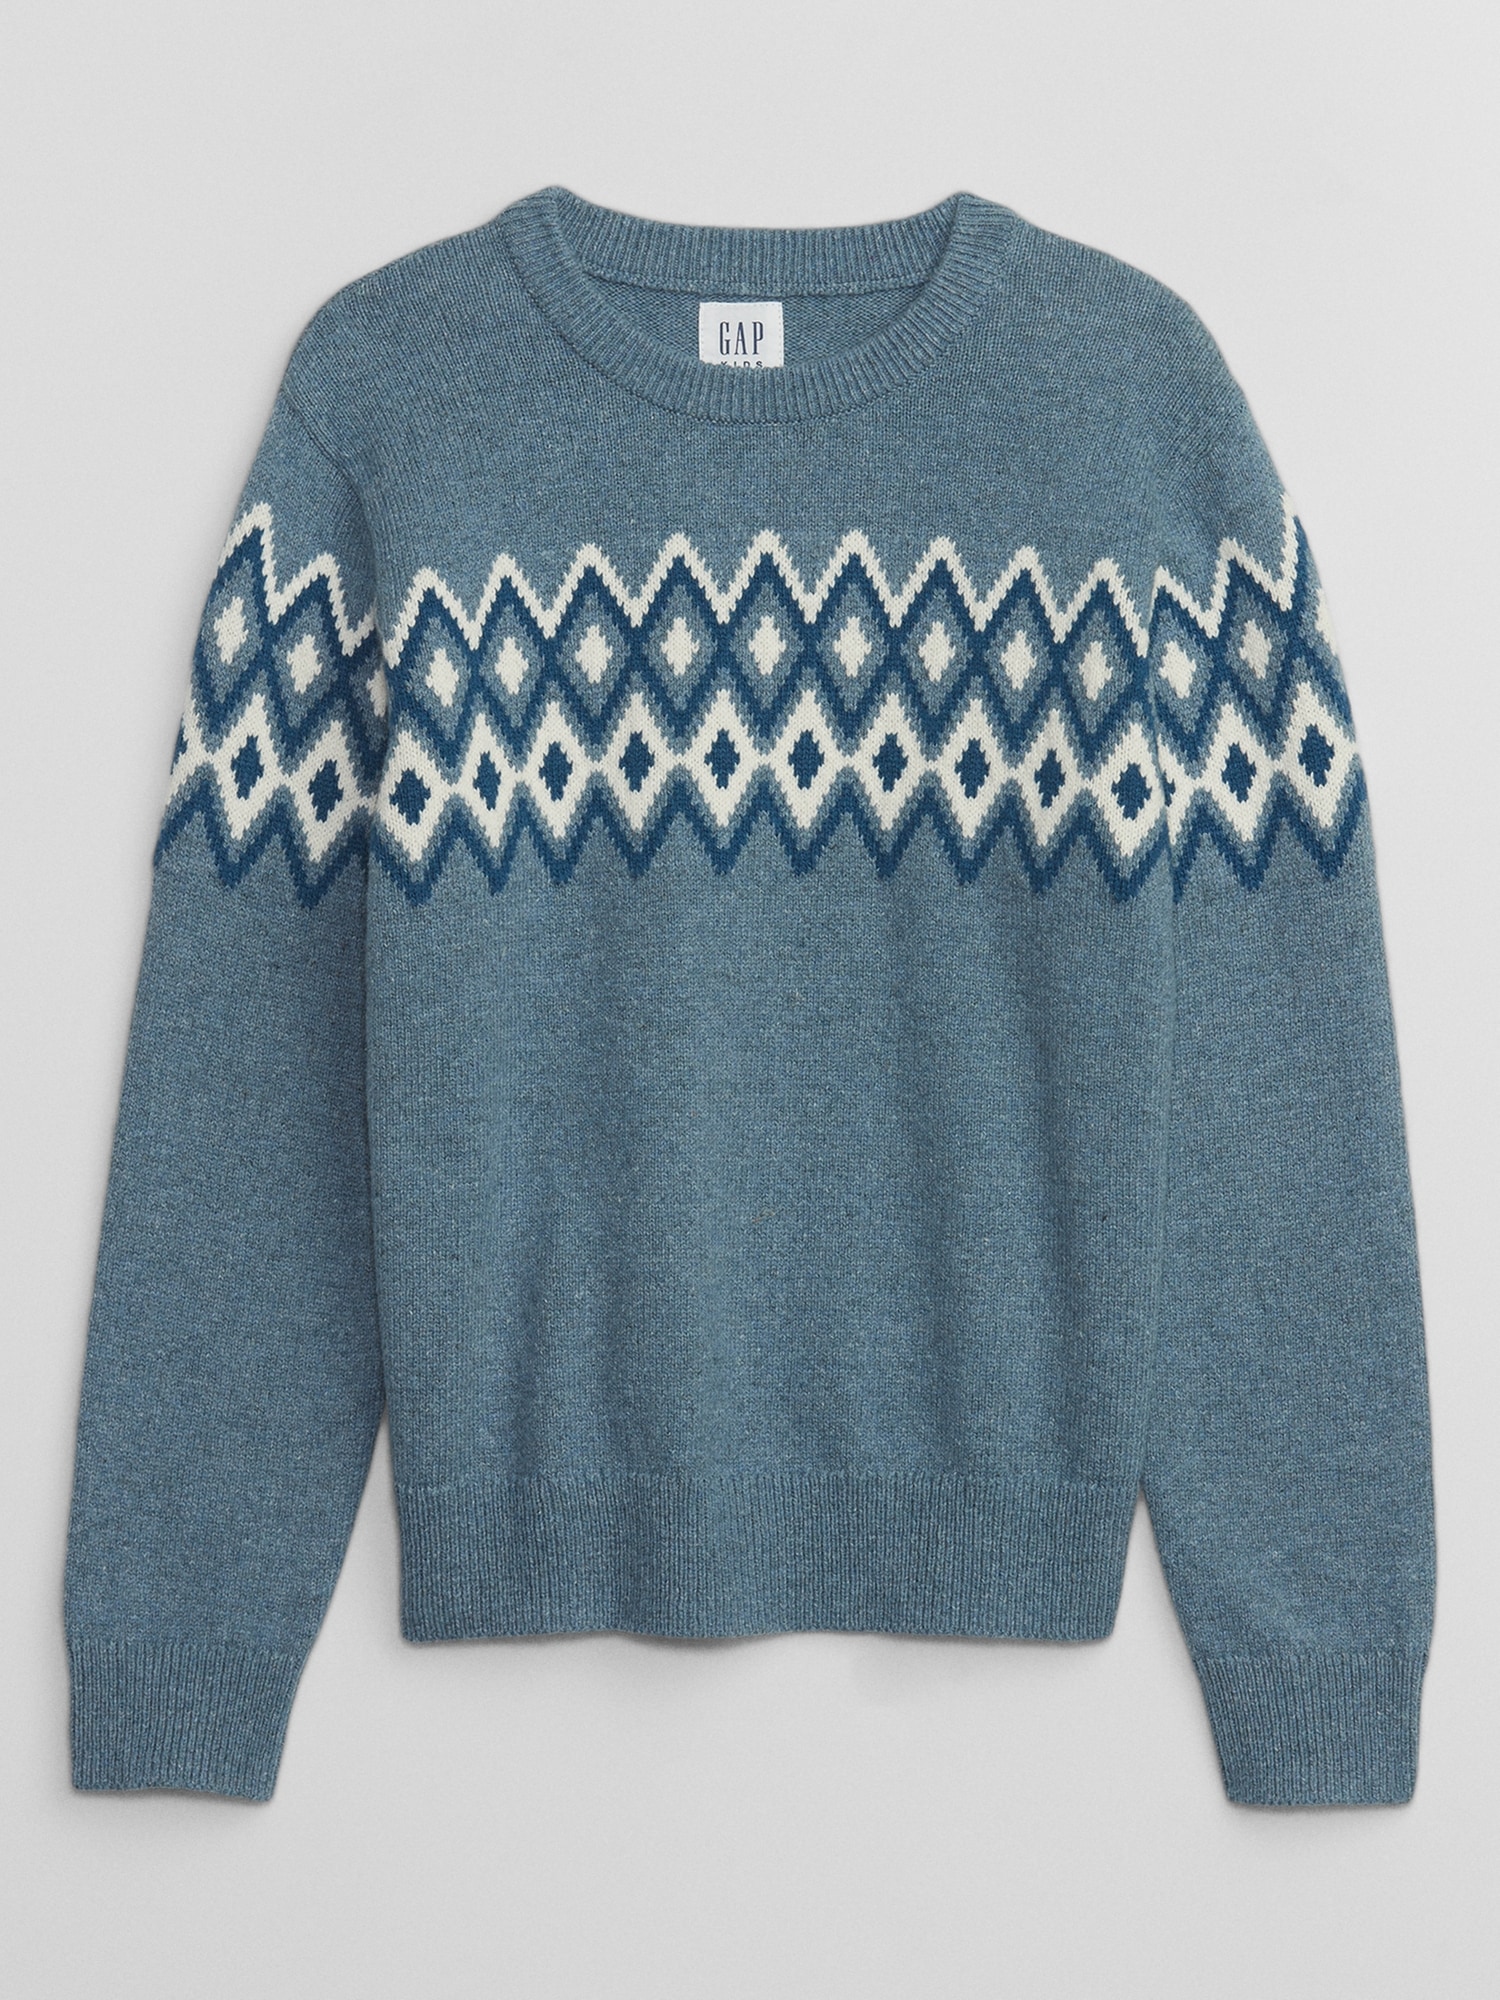 Kid's Sweater Blue Cotton Knit